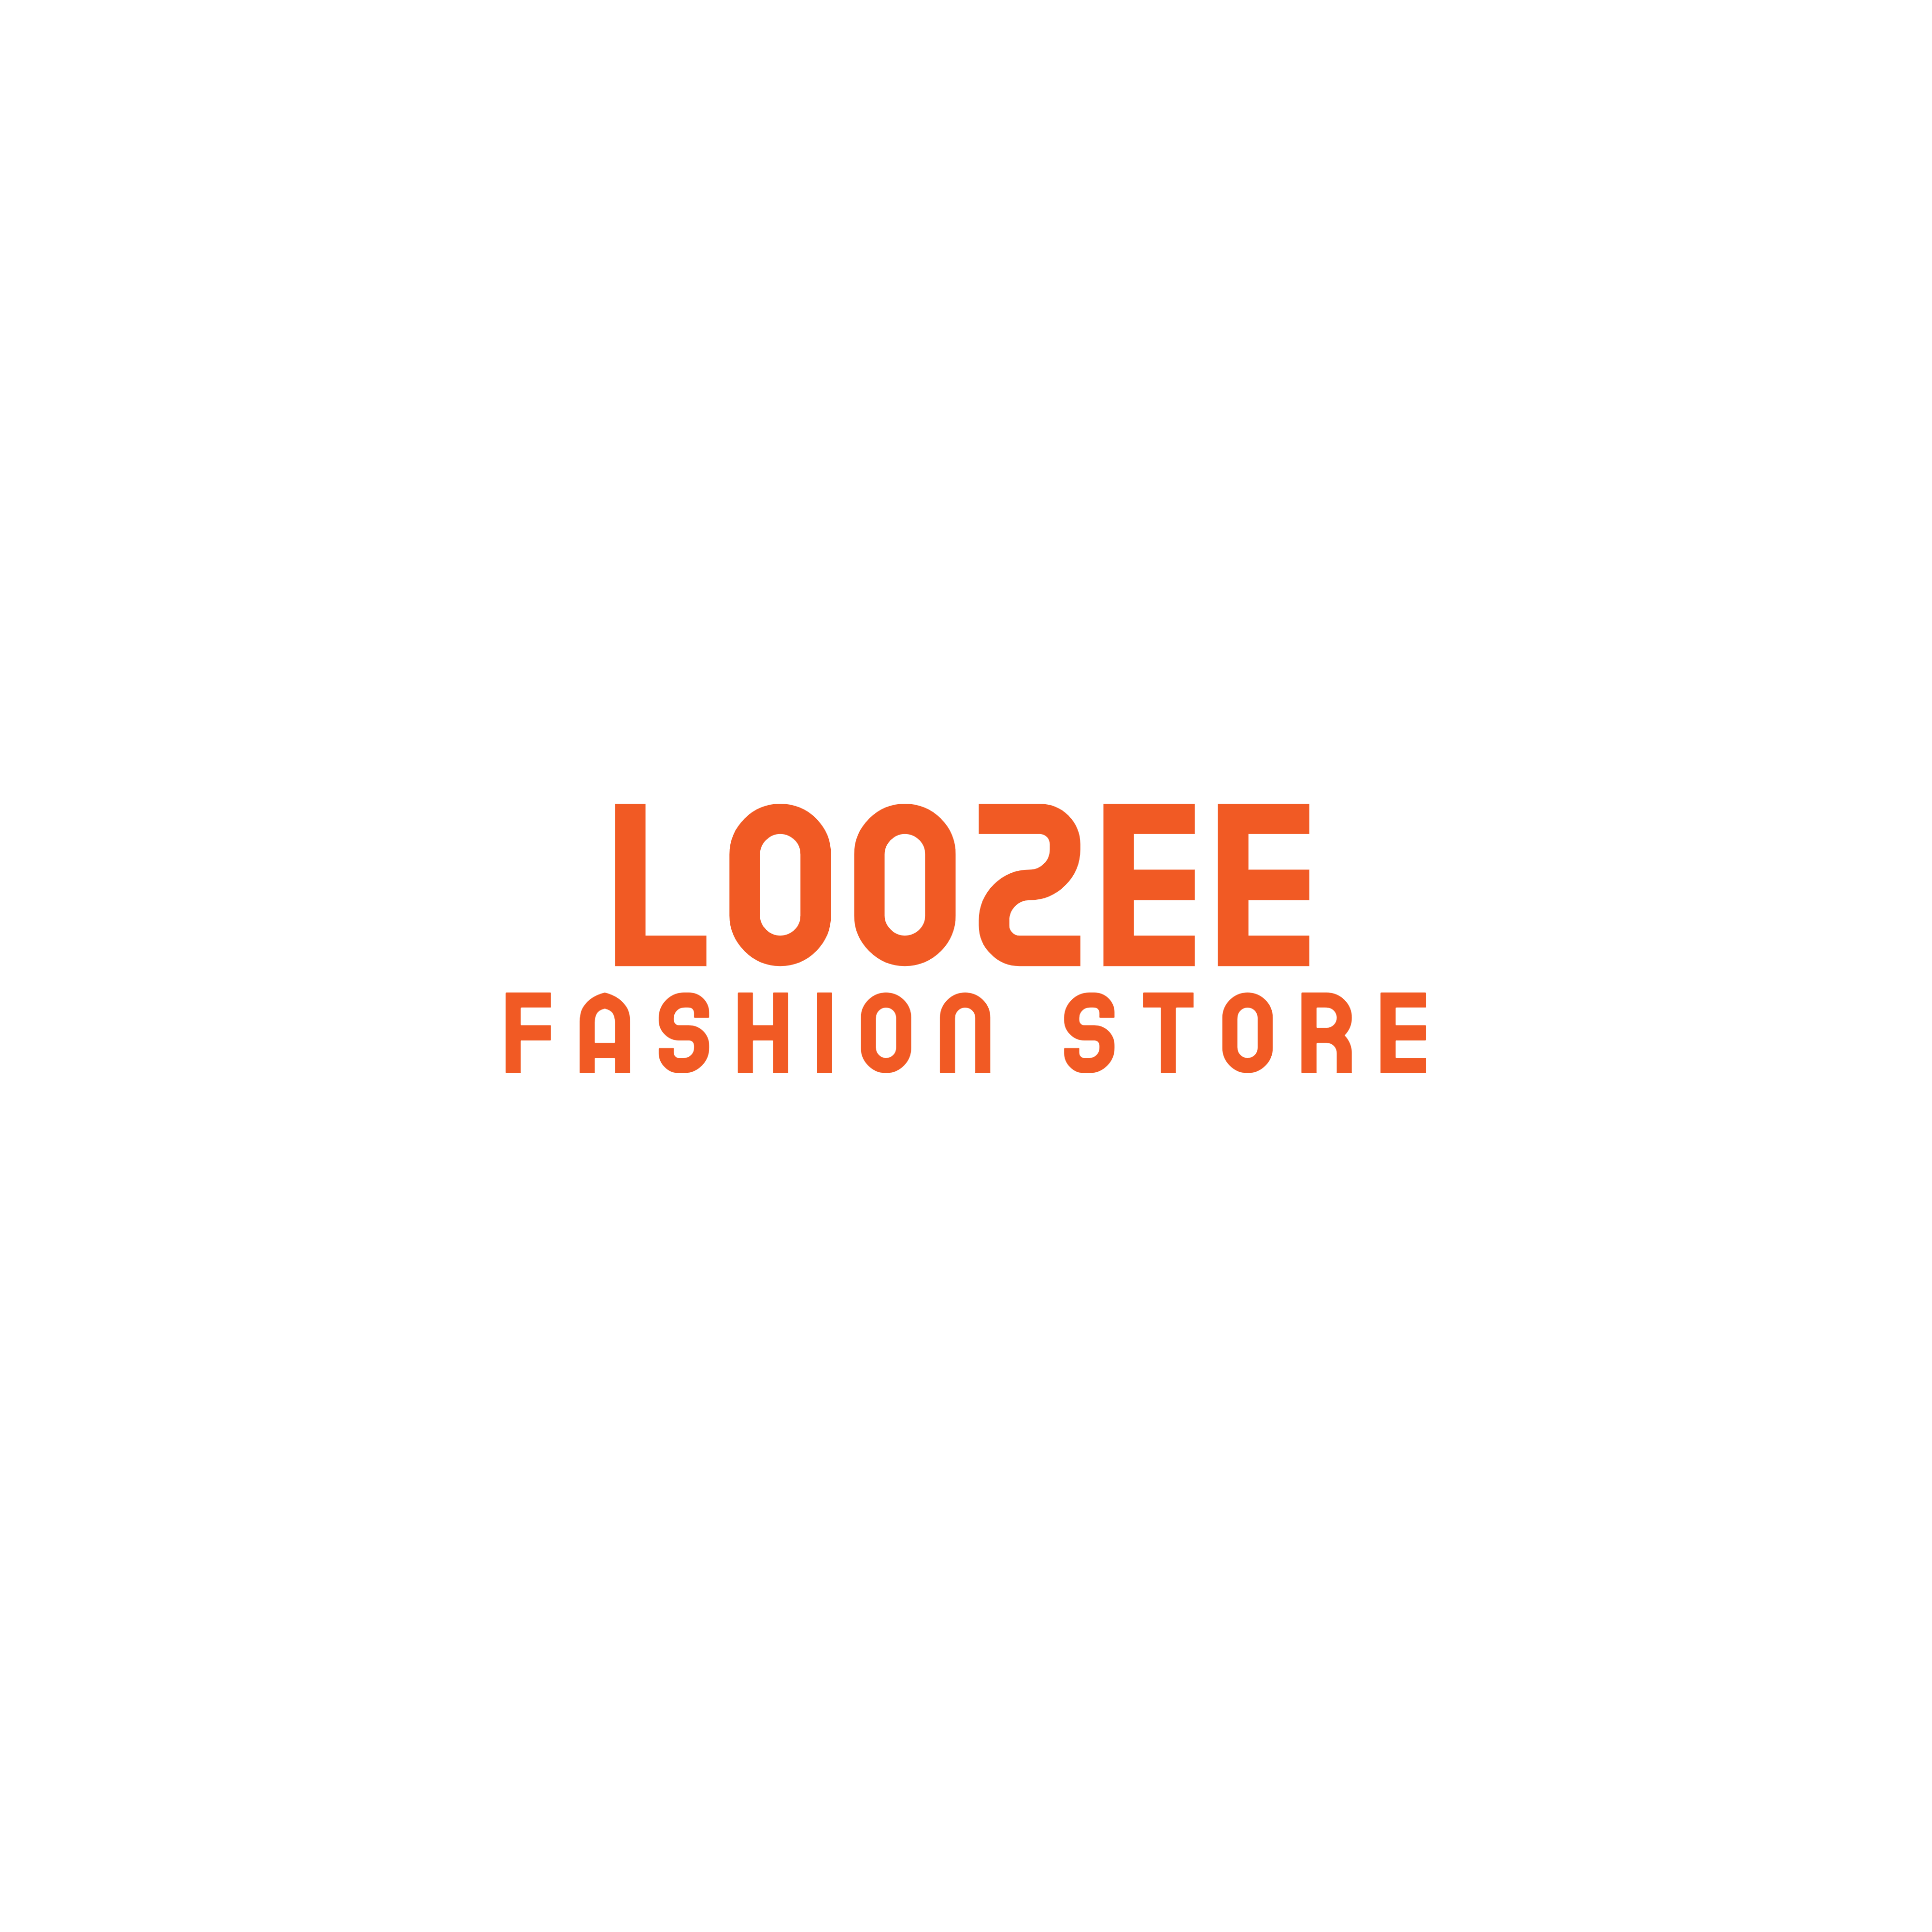 Loozee Fashion Store